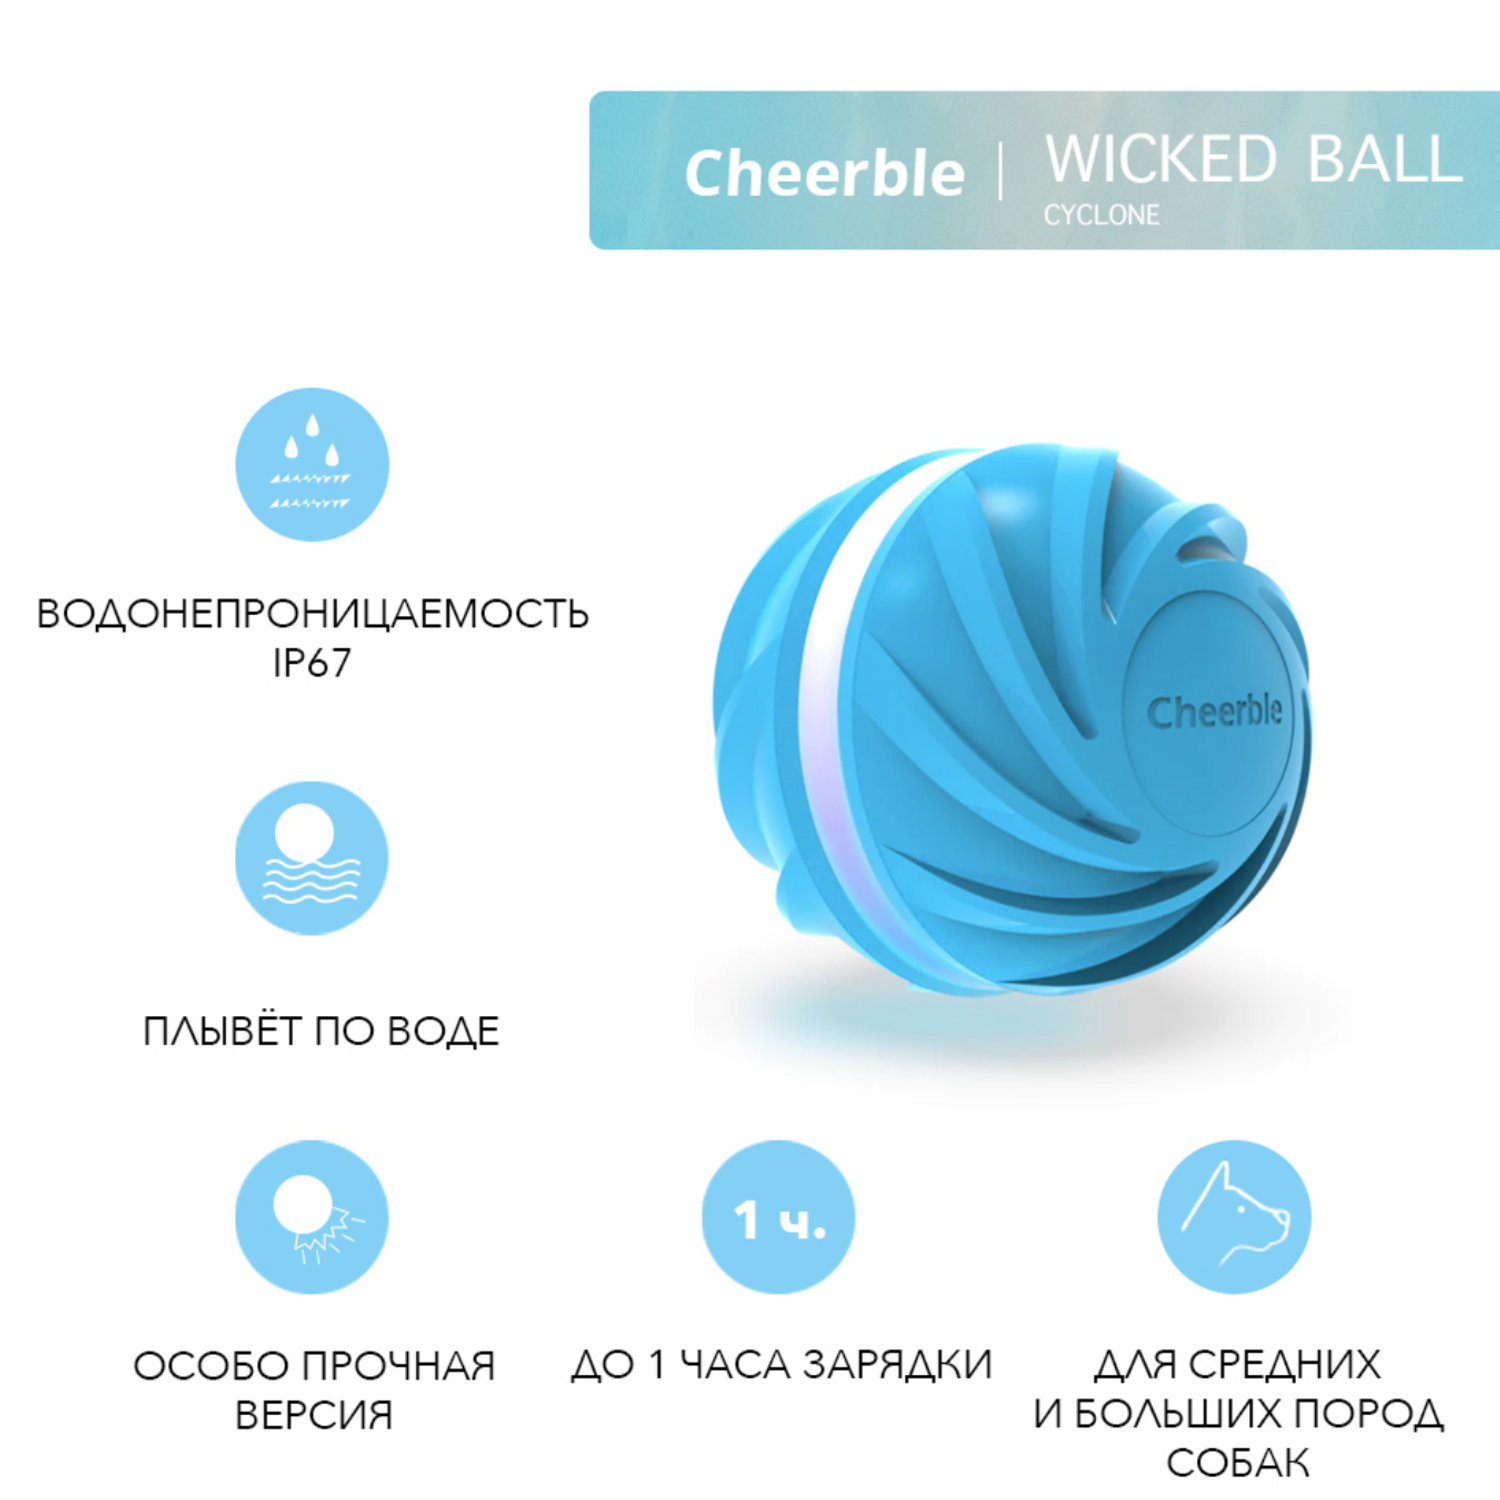 Интерактивная игрушка Cheerble мячик-дразнилка для собак Wicked Ball Cyclone - фото 2